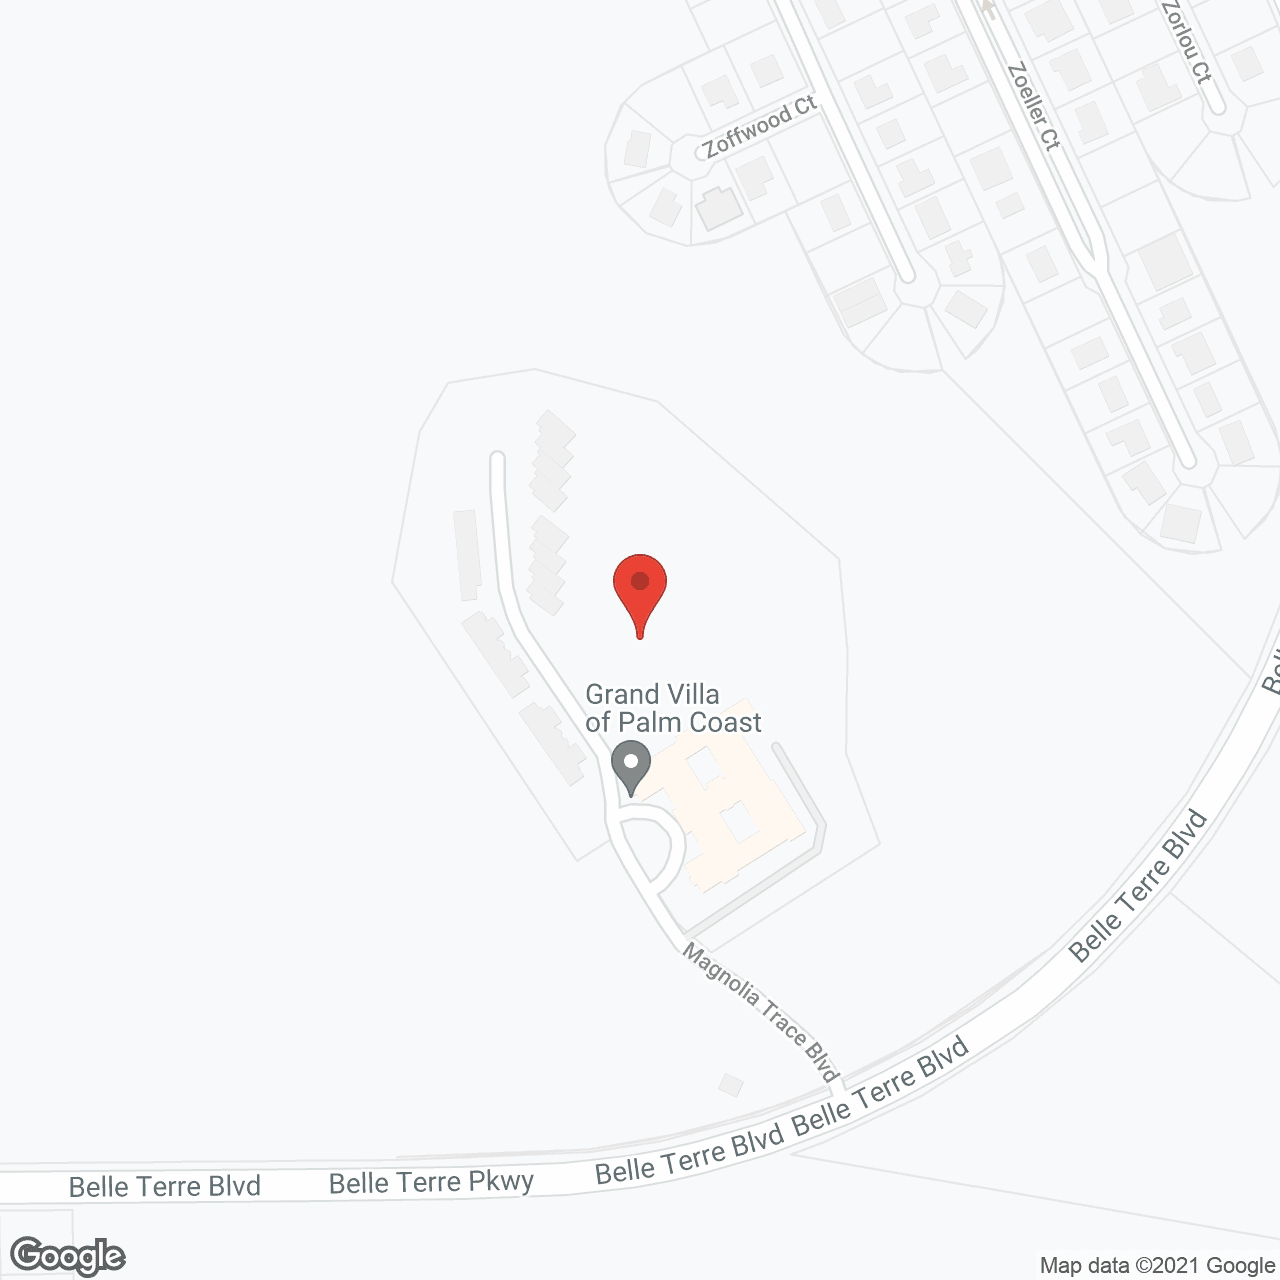 Grand Villa of Palm Coast in google map